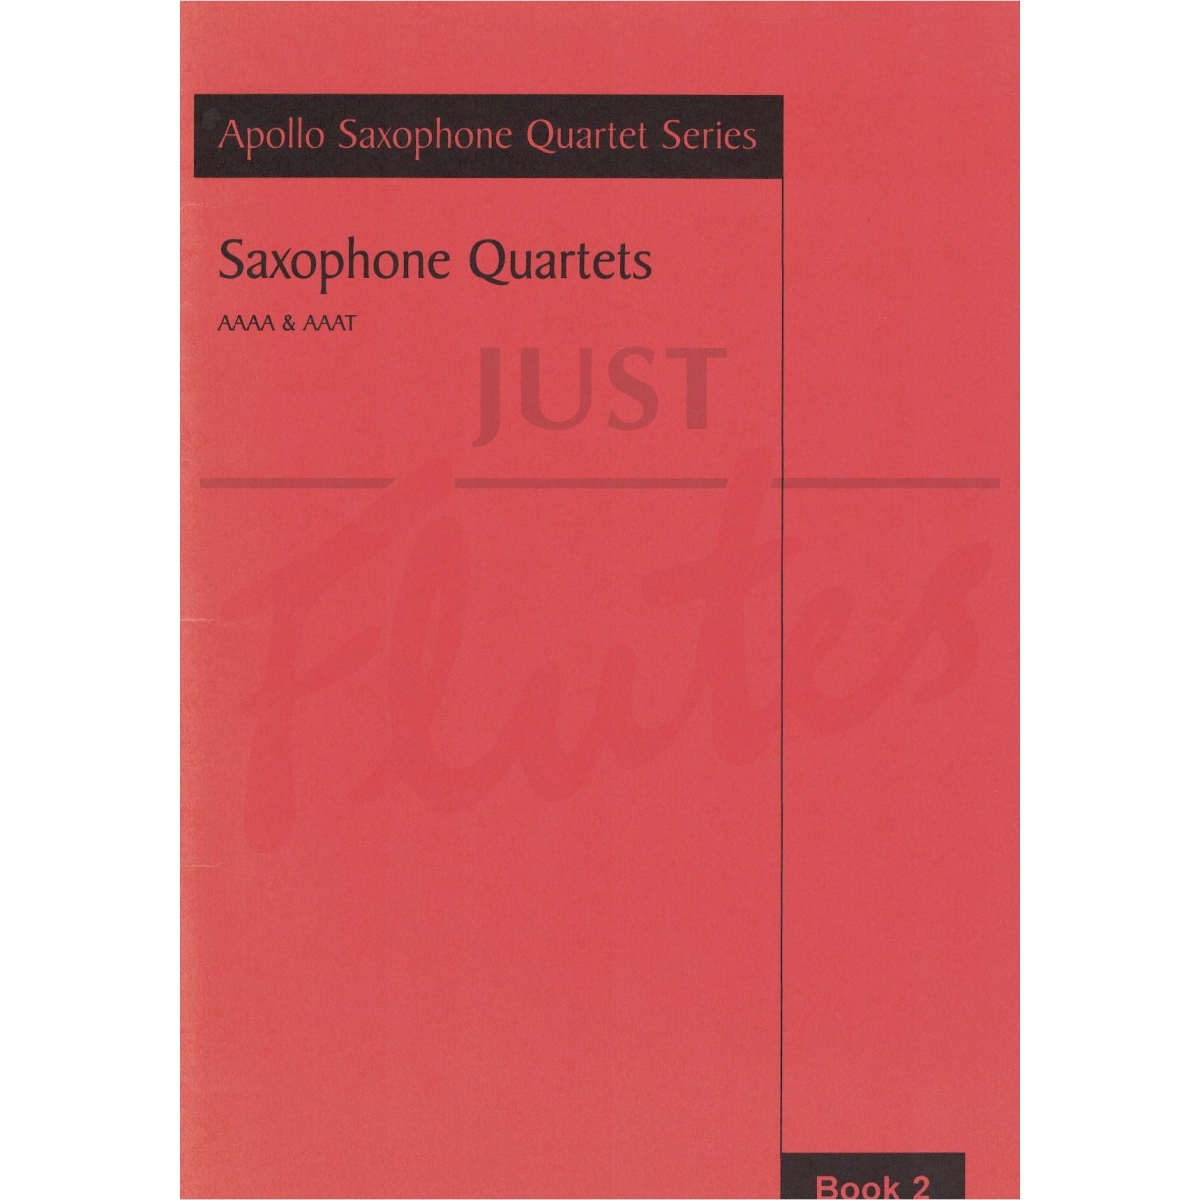 Saxophone Quartets, Book 2